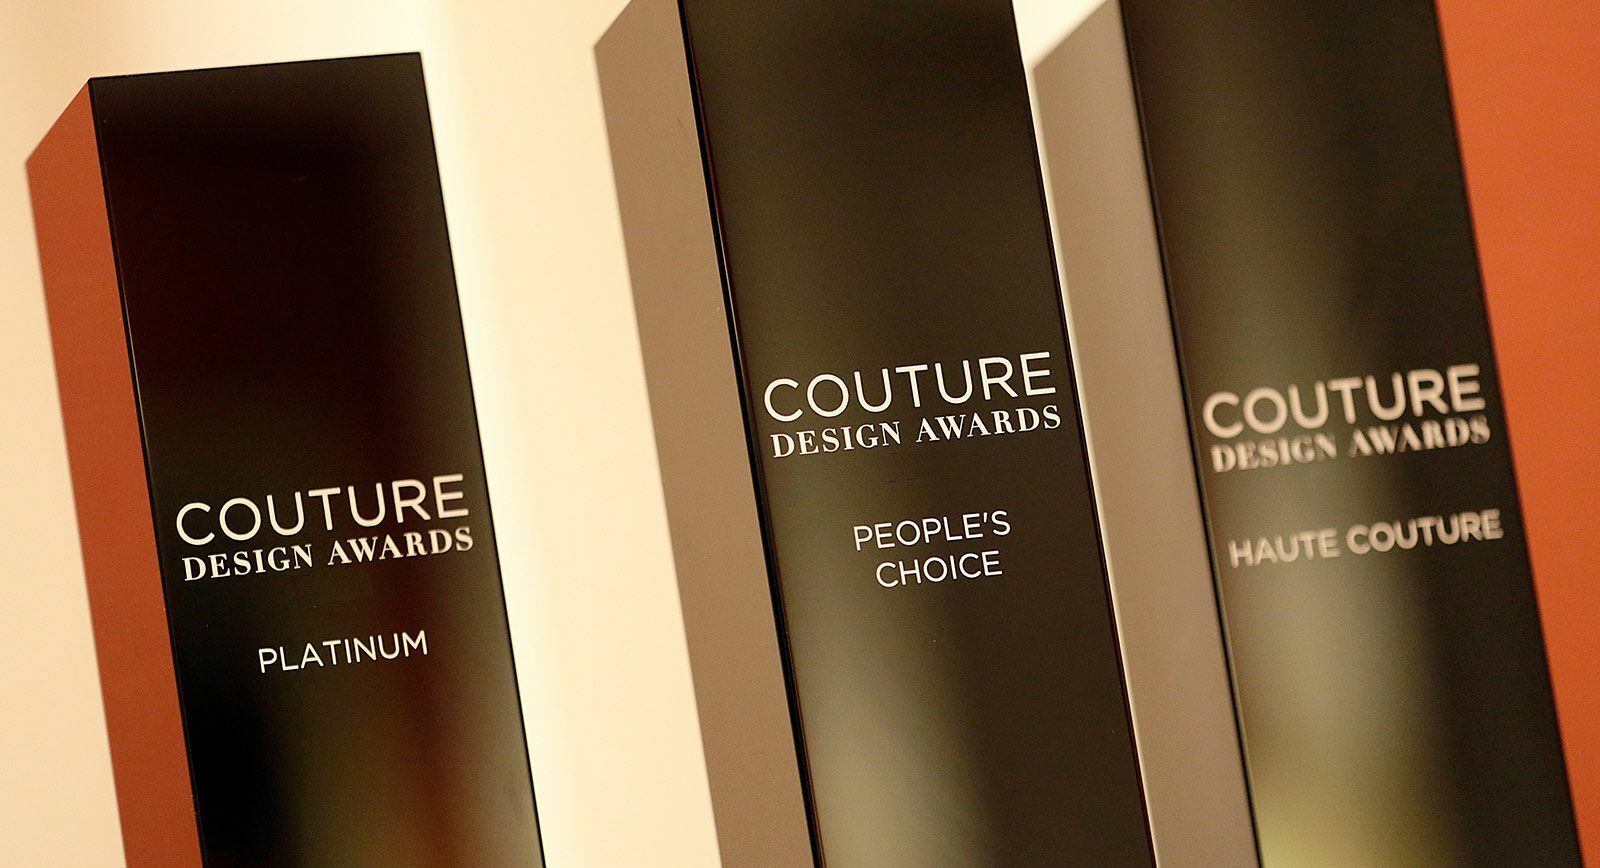 Couture design awards 